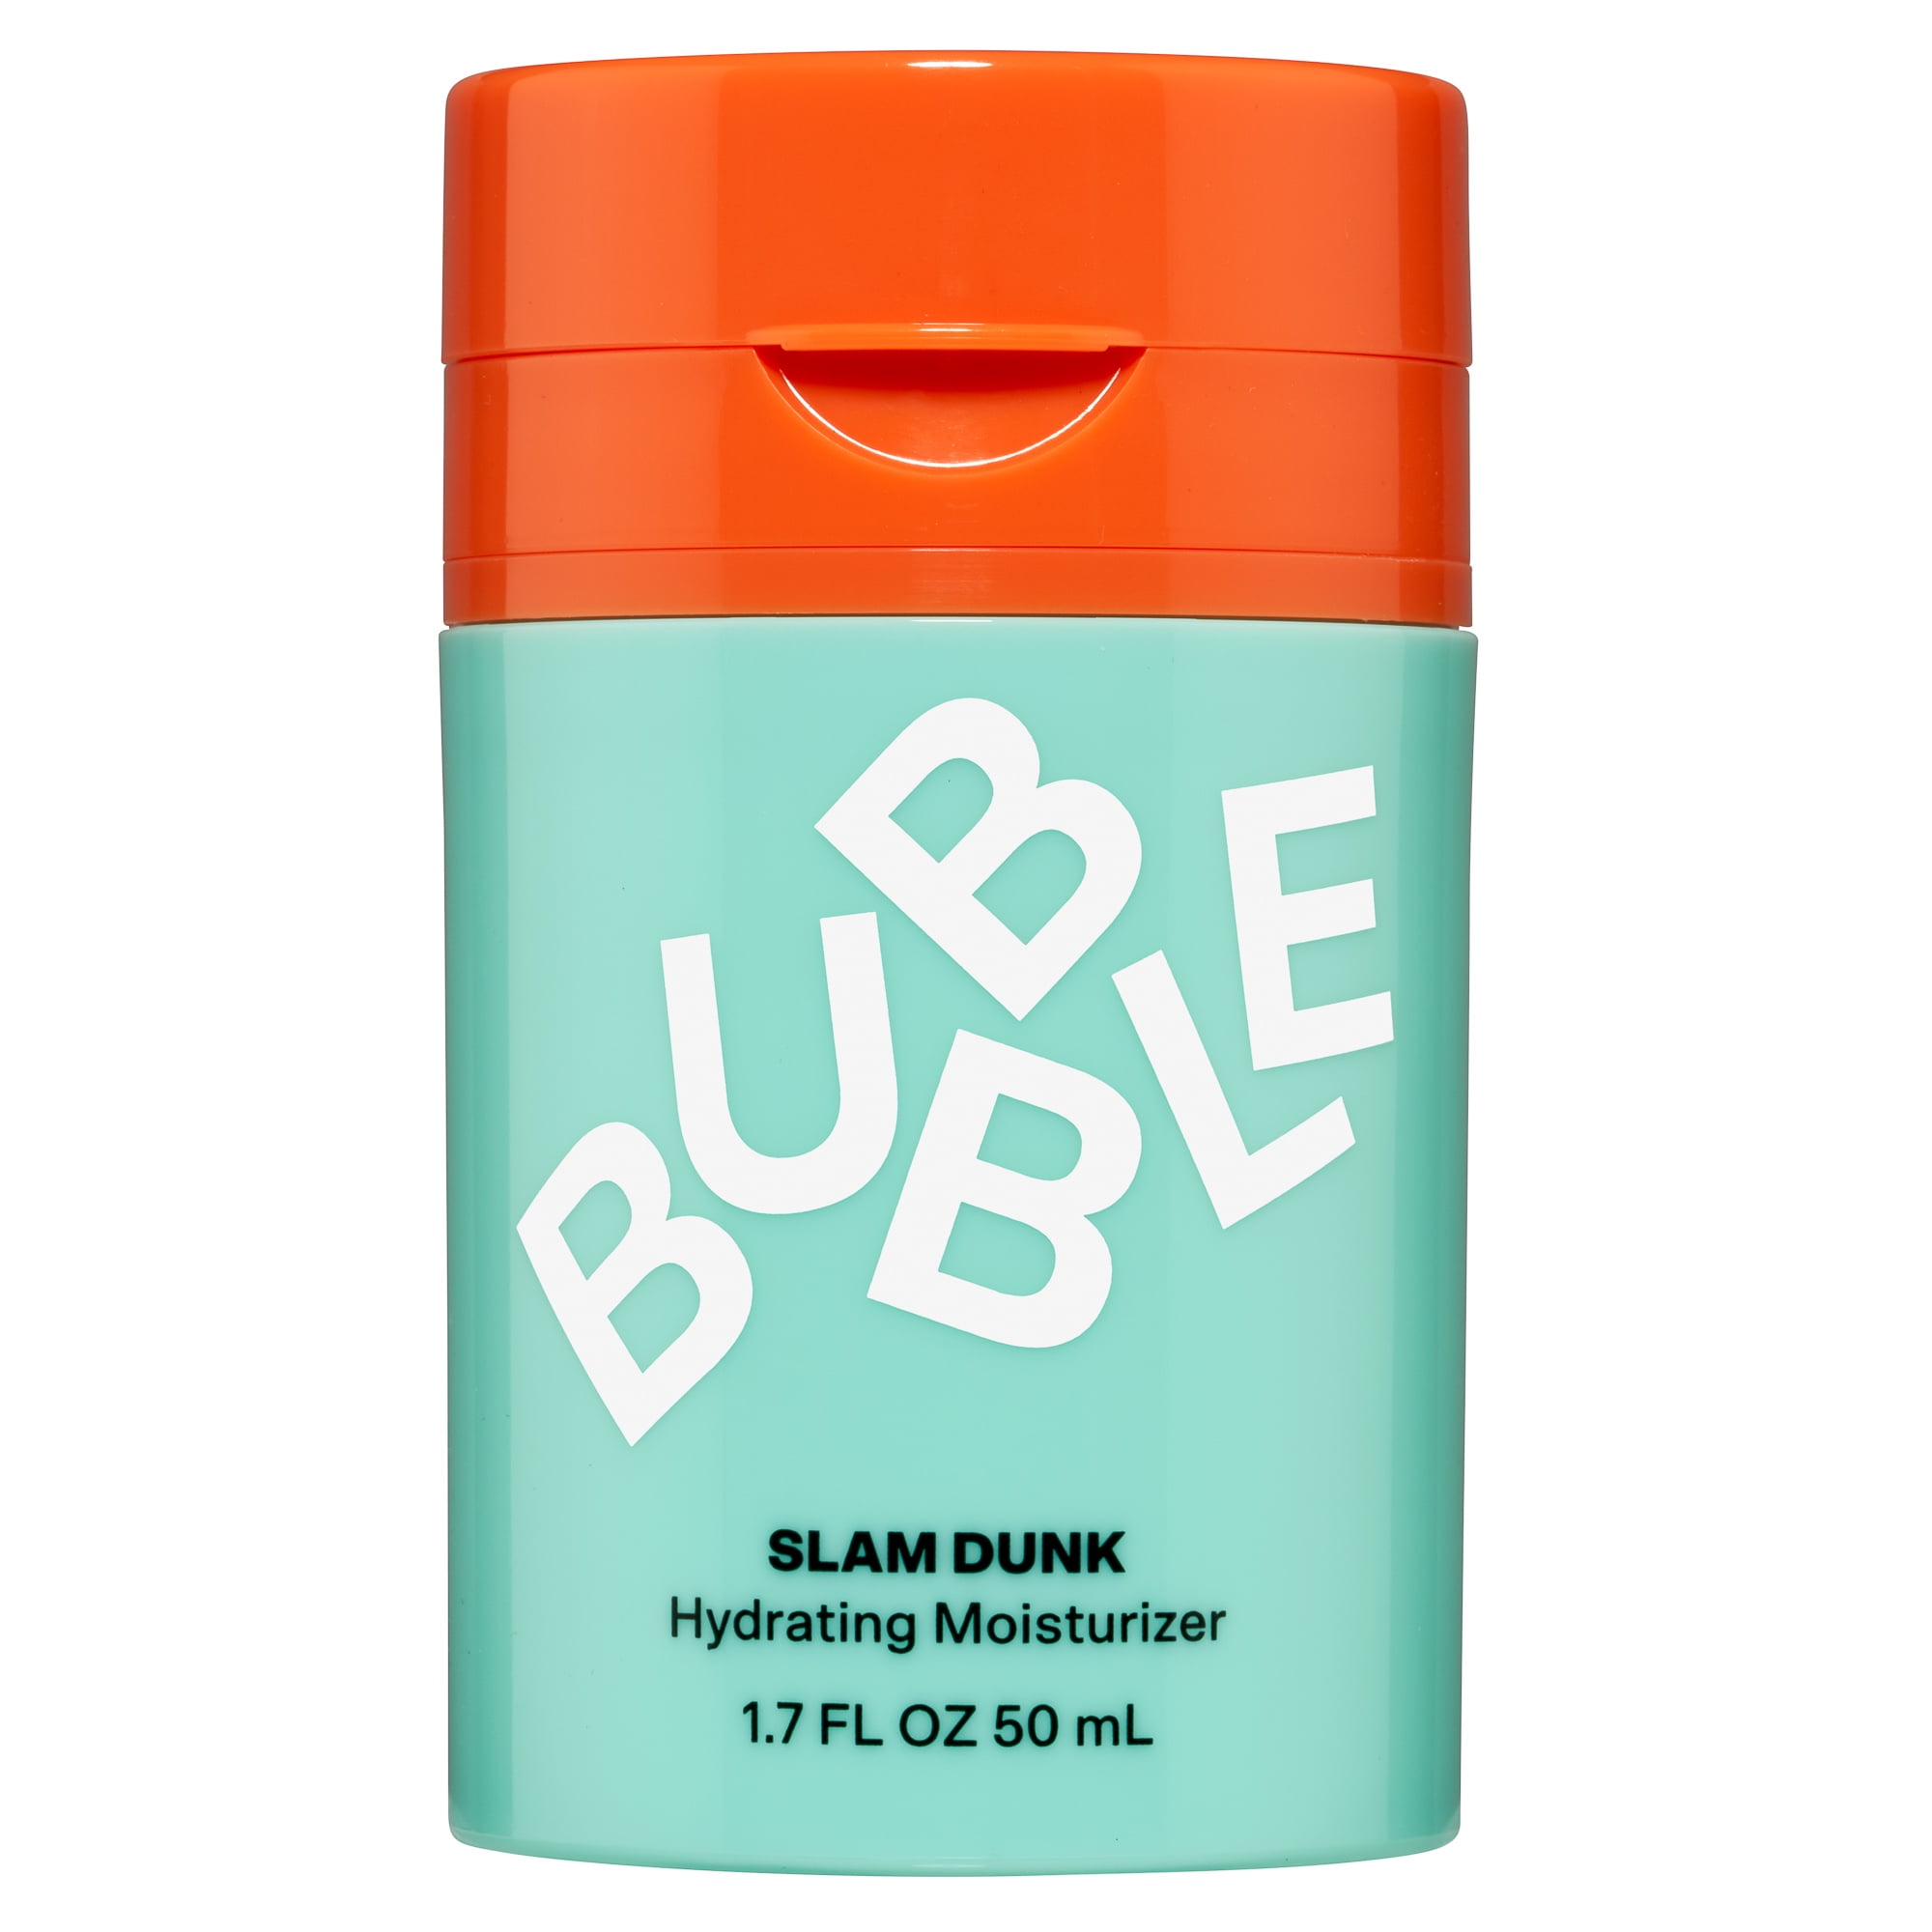 Bubble Skincare Slam Dunk Hydrating Face Moisturizer, for Normal to Dry Skin, 1.7 fl oz/ 50mL - Walmart.com